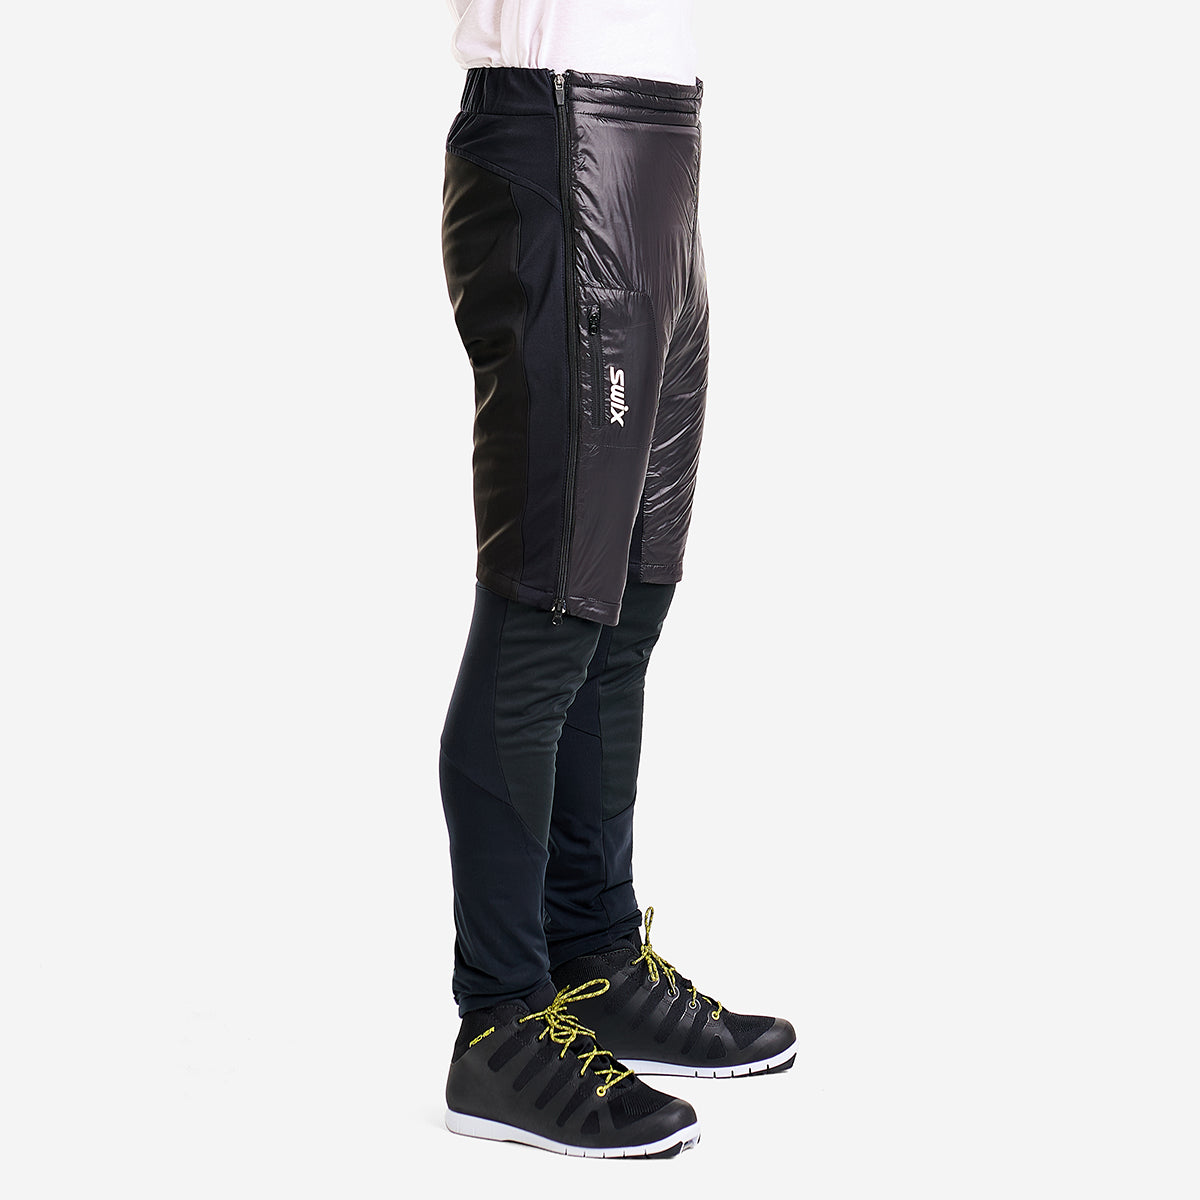 Menali - Men's Insulated Shorts 2.0